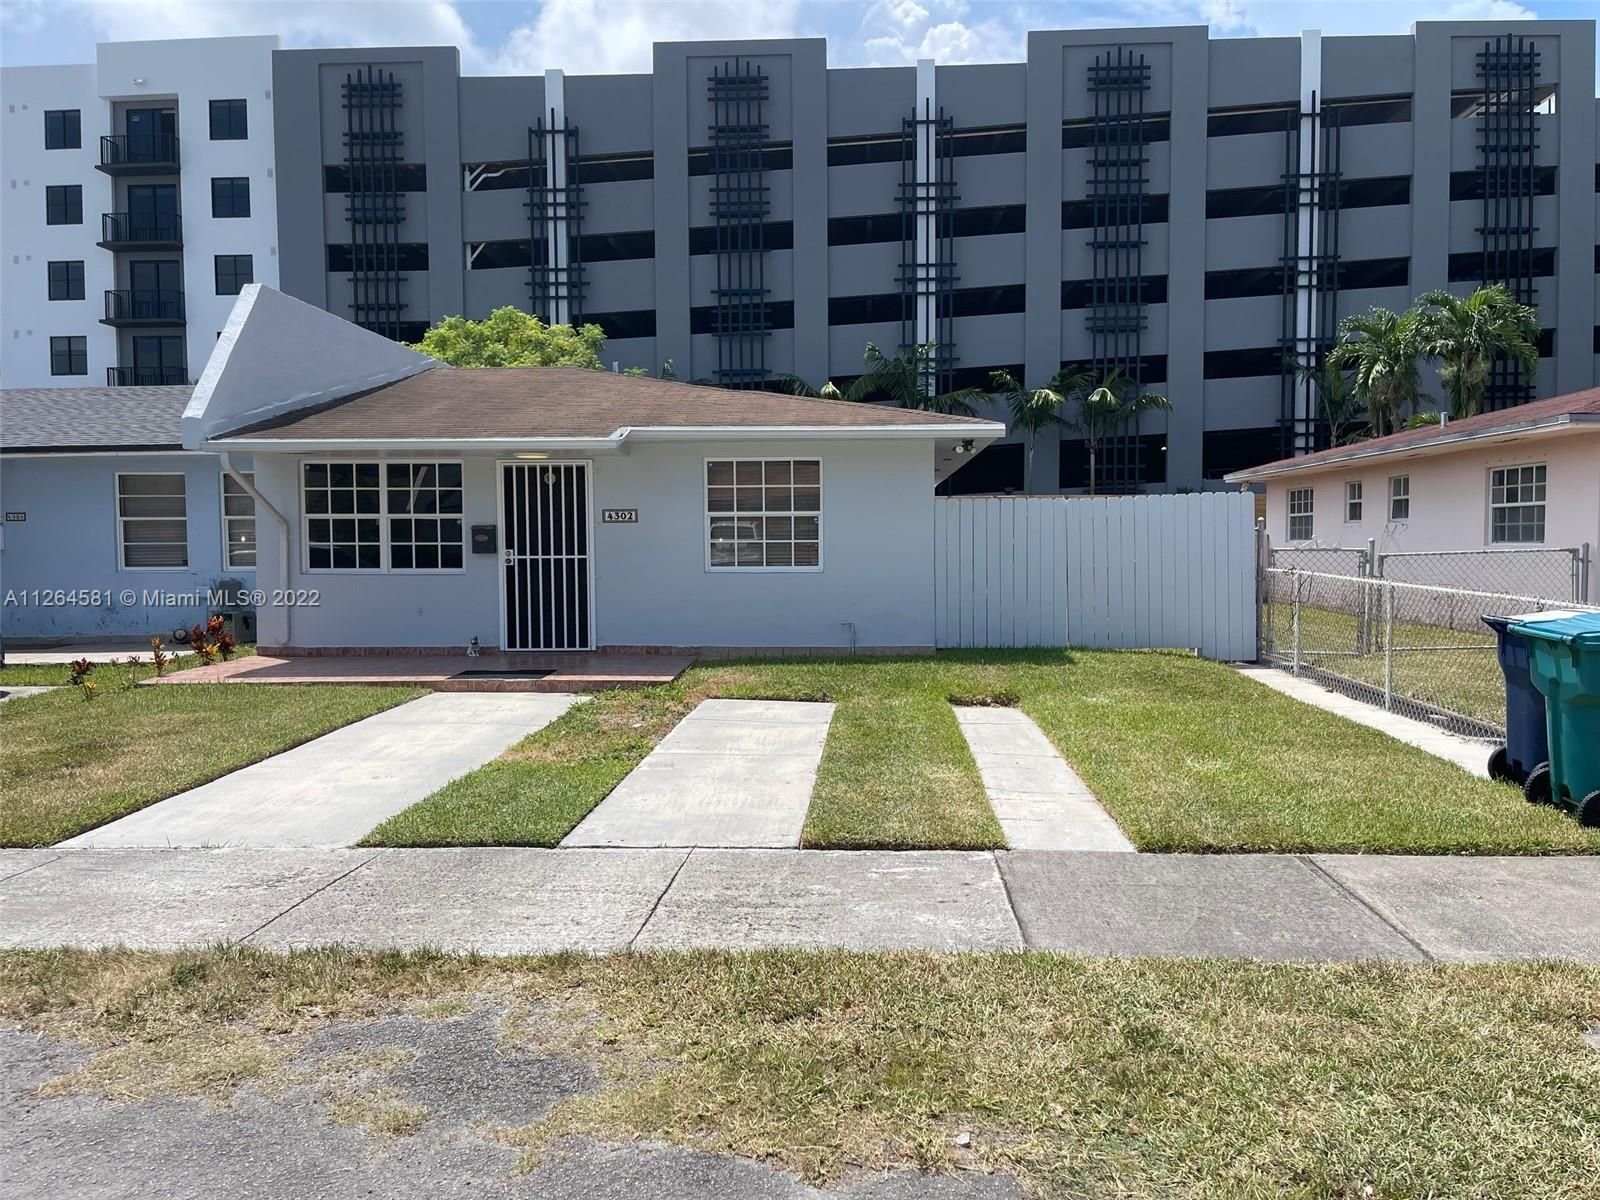 Real estate property located at 4302 69th Ave, Miami-Dade County, Miami, FL